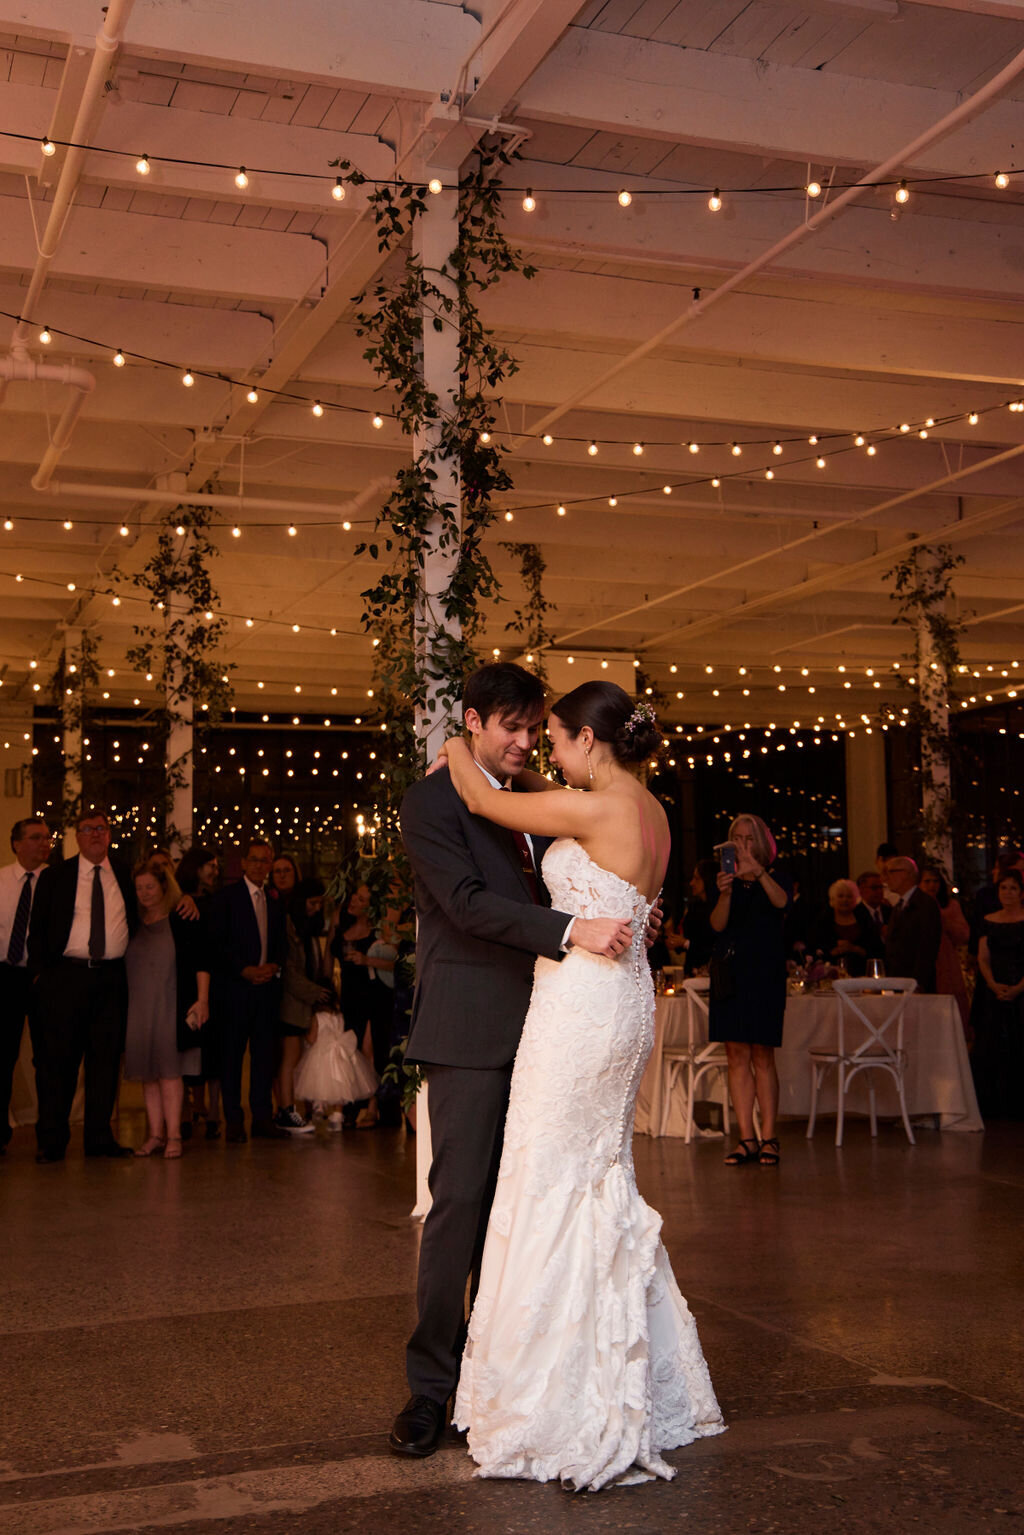 bride-groom-first-dance-twinkle-lights